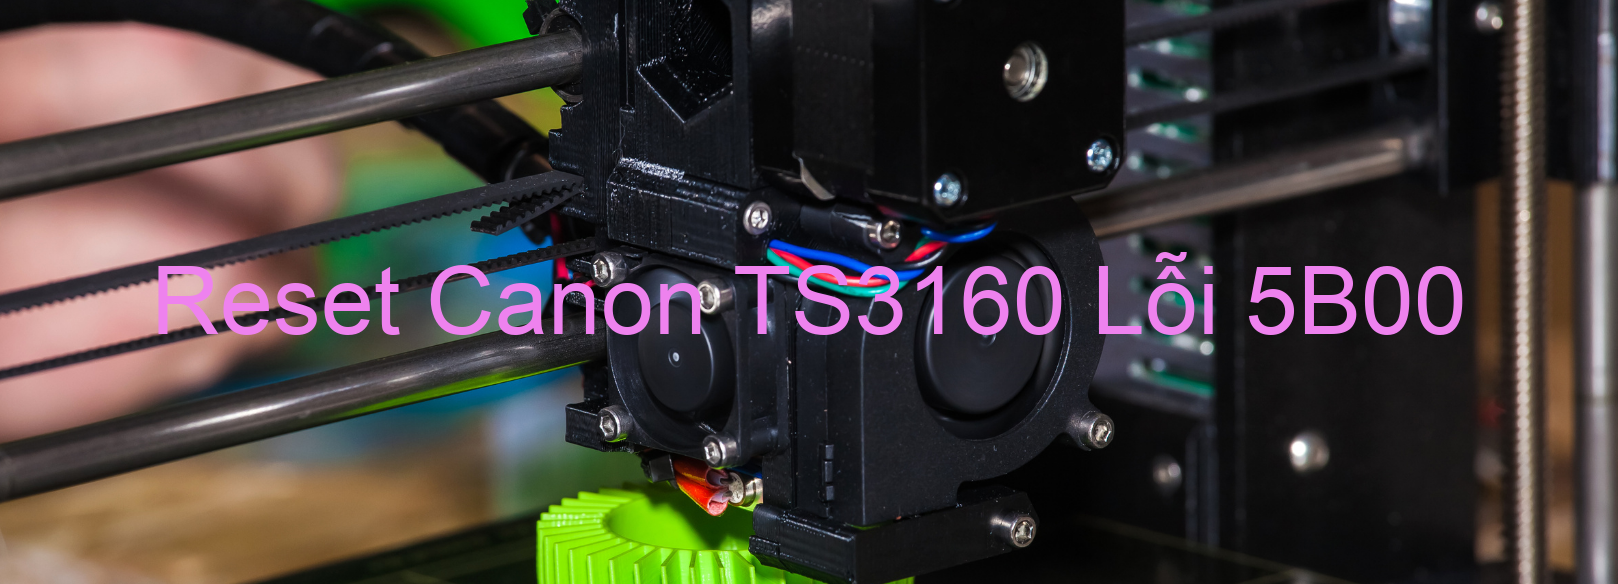 Reset Canon TS3160 Lỗi 5B00